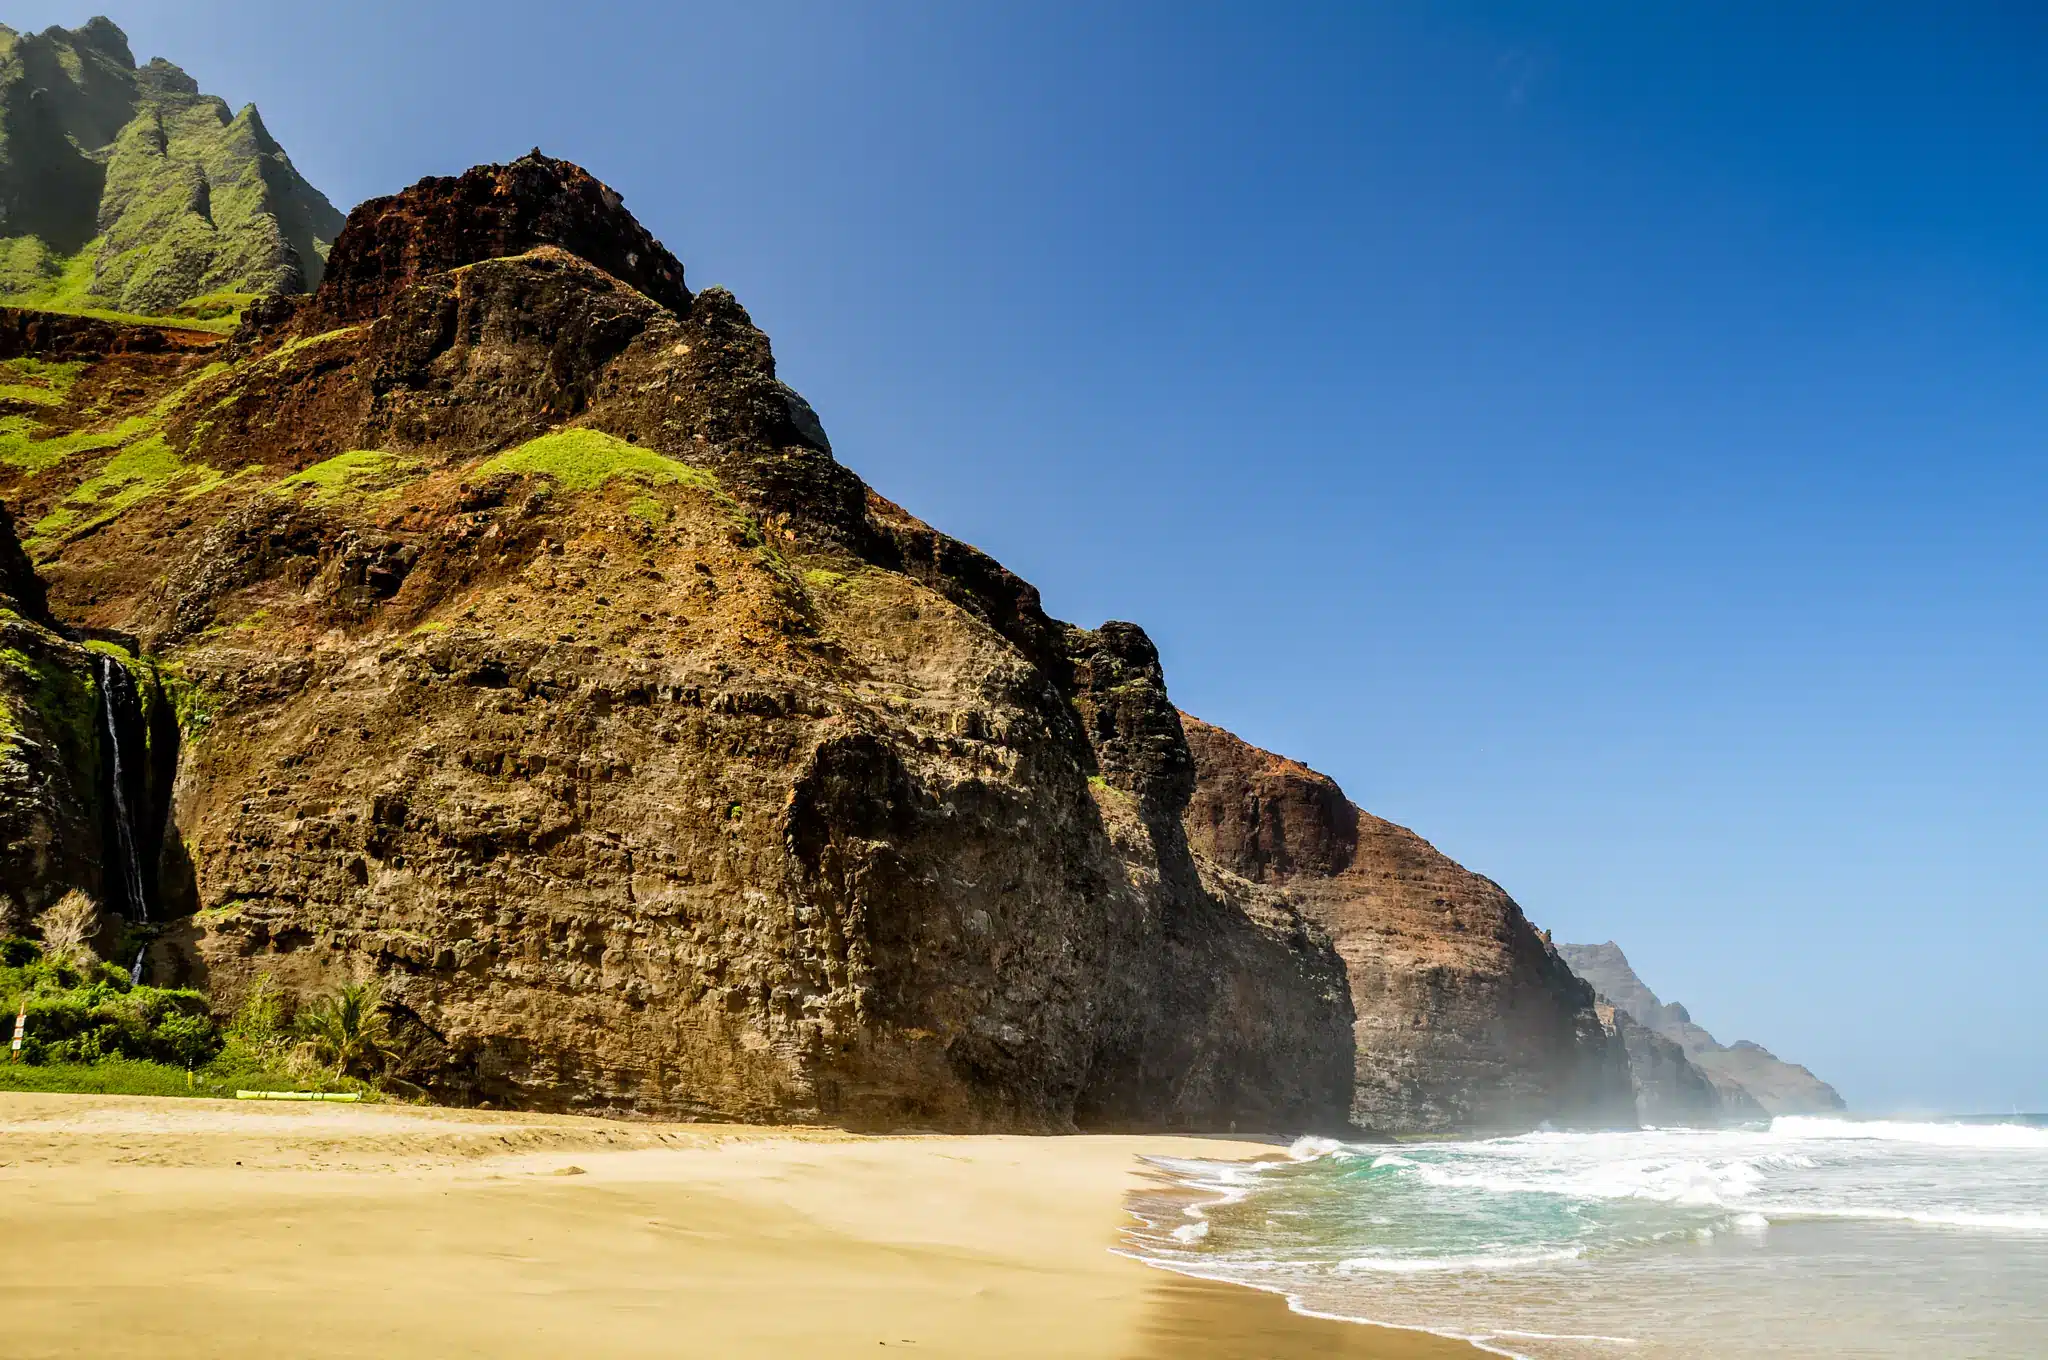 Kalalau Beach is a Beach located in the city of Wainiha on Kauai, Hawaii